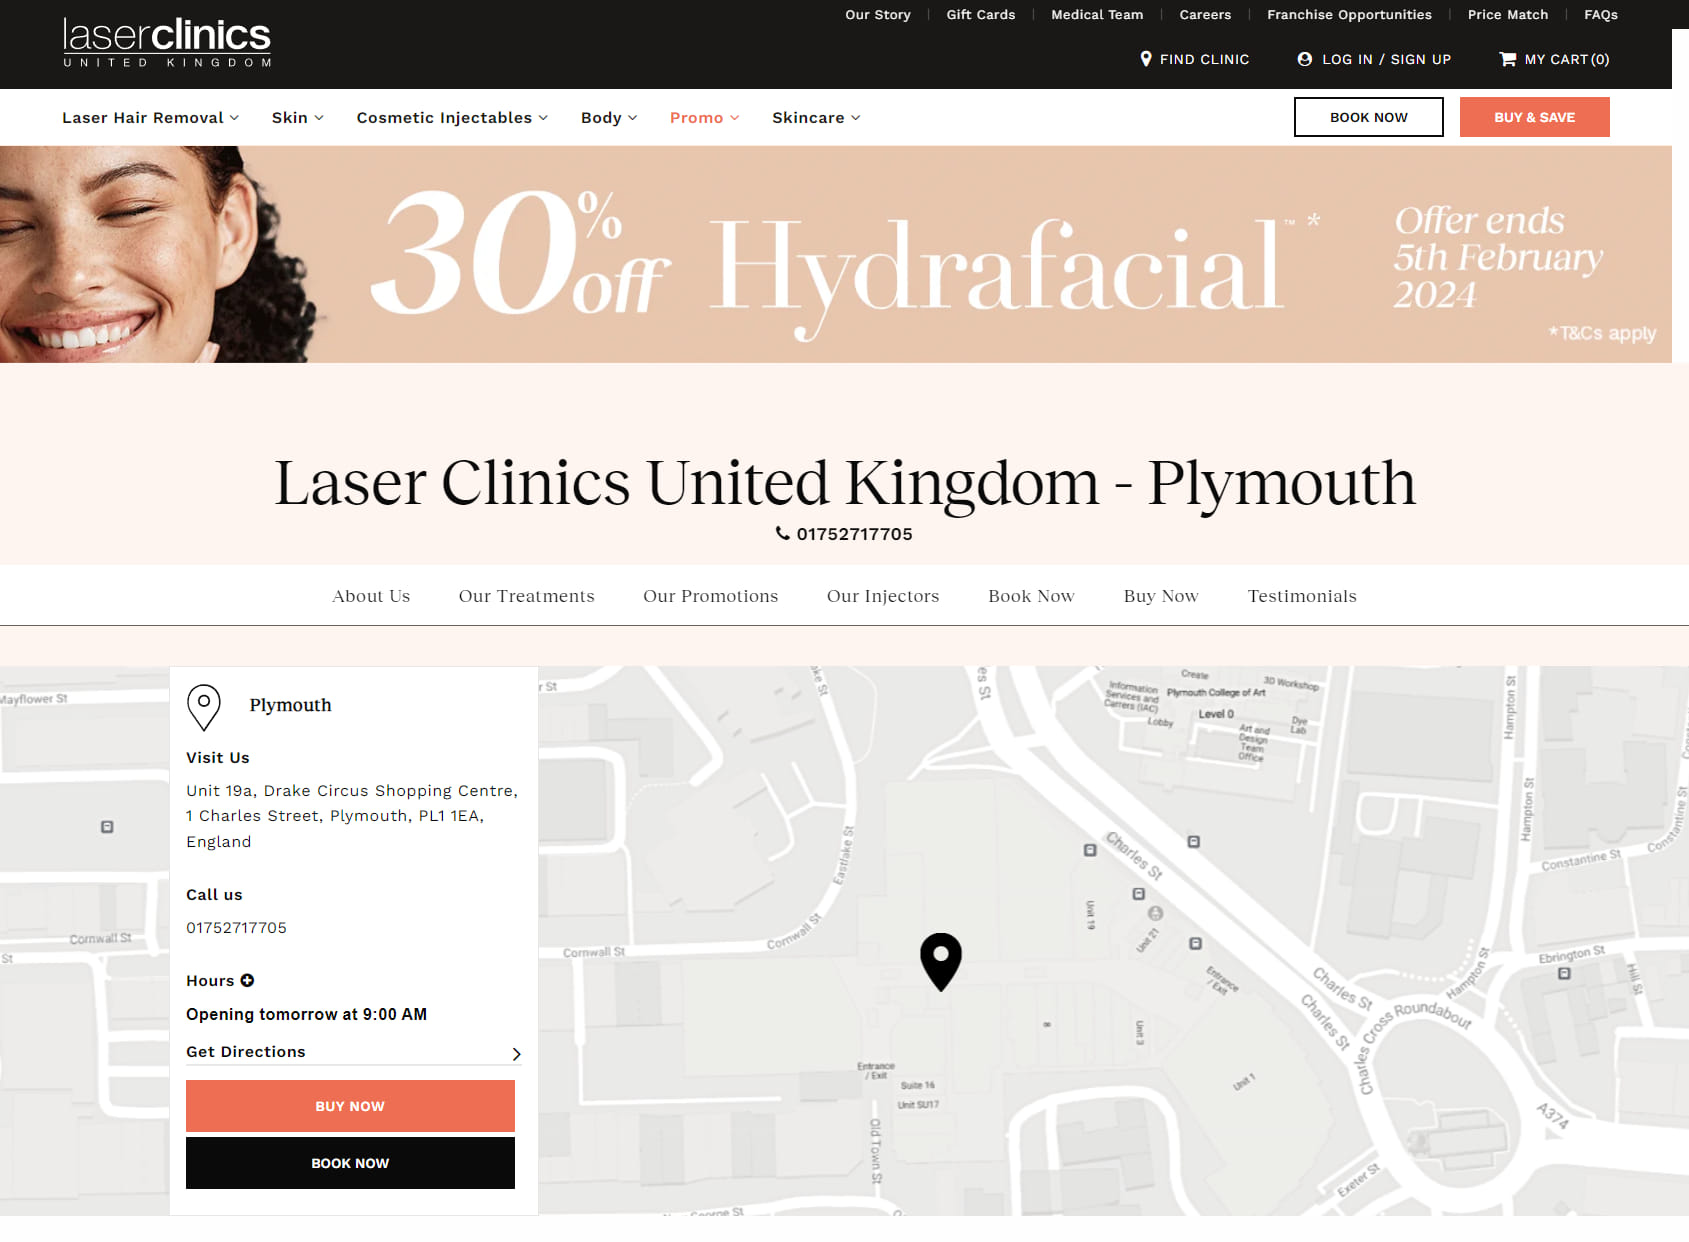 Laser Clinics UK - Plymouth